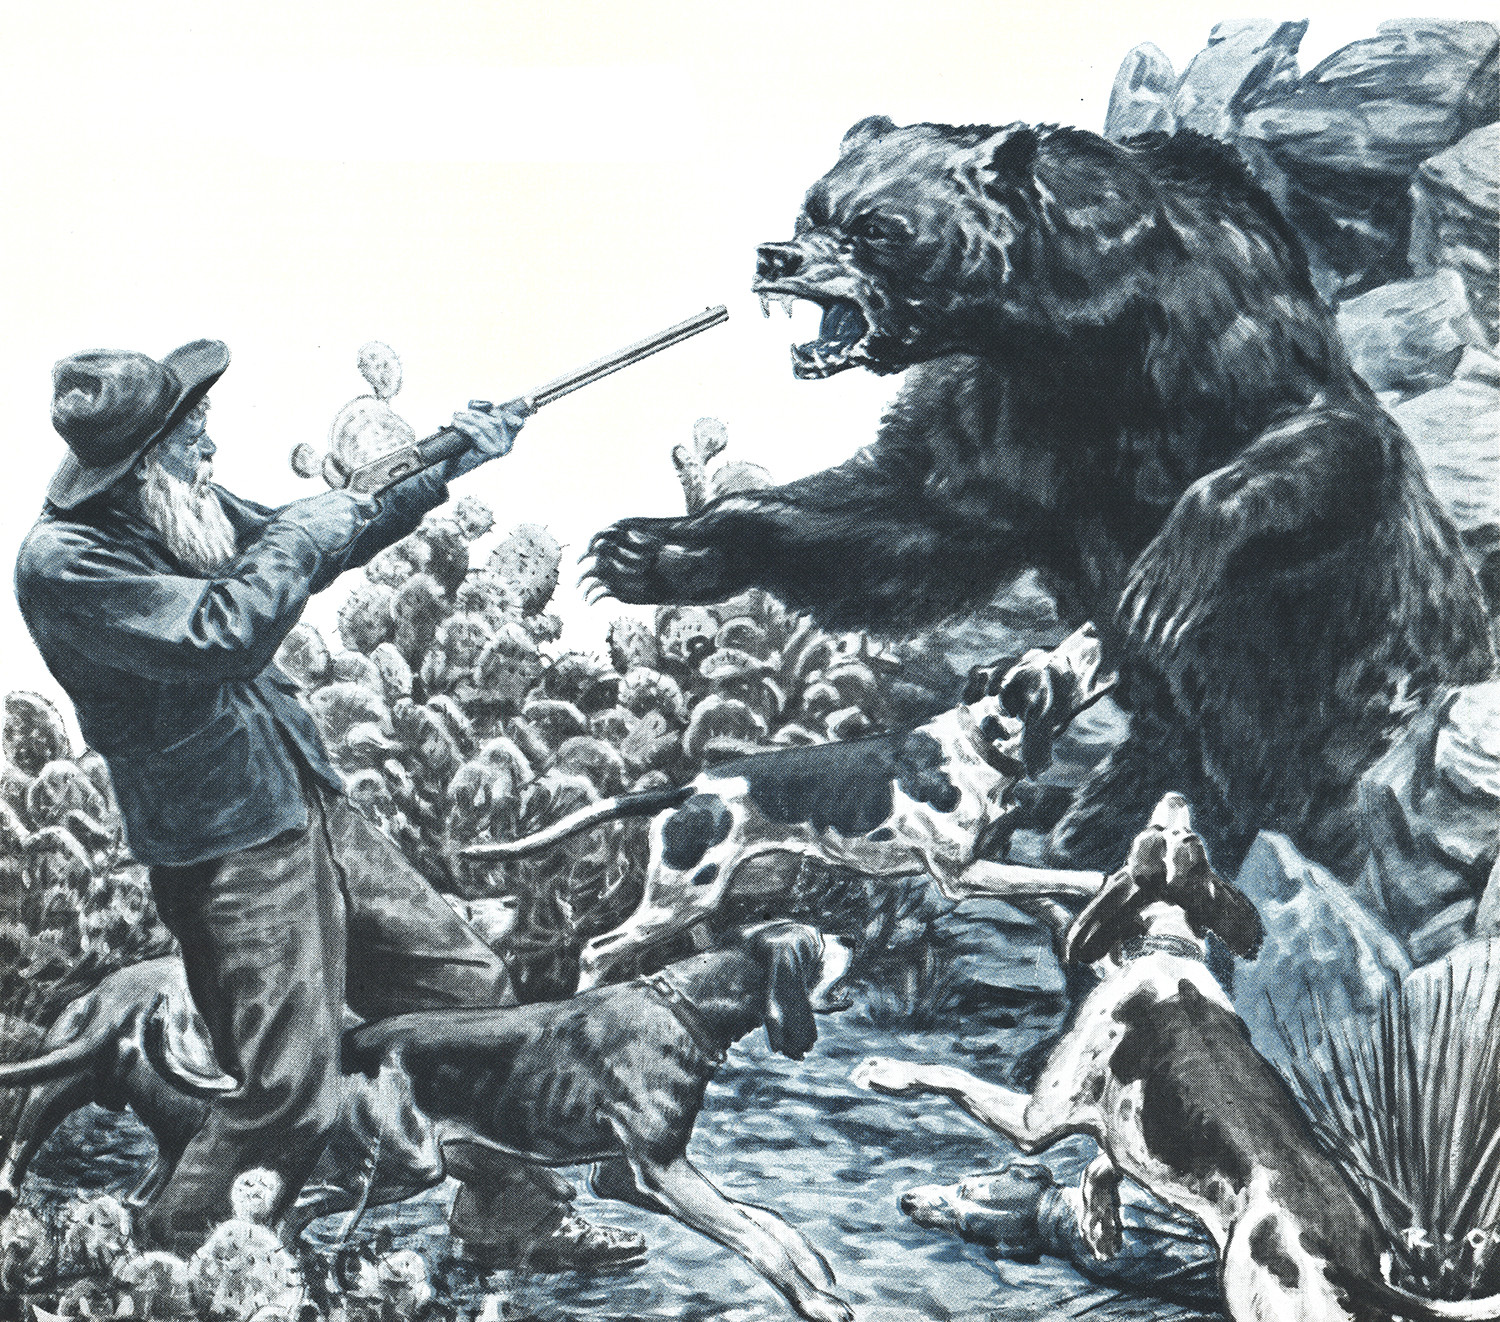 old magazine illustration of man shooting bear, dogs surrounding bear